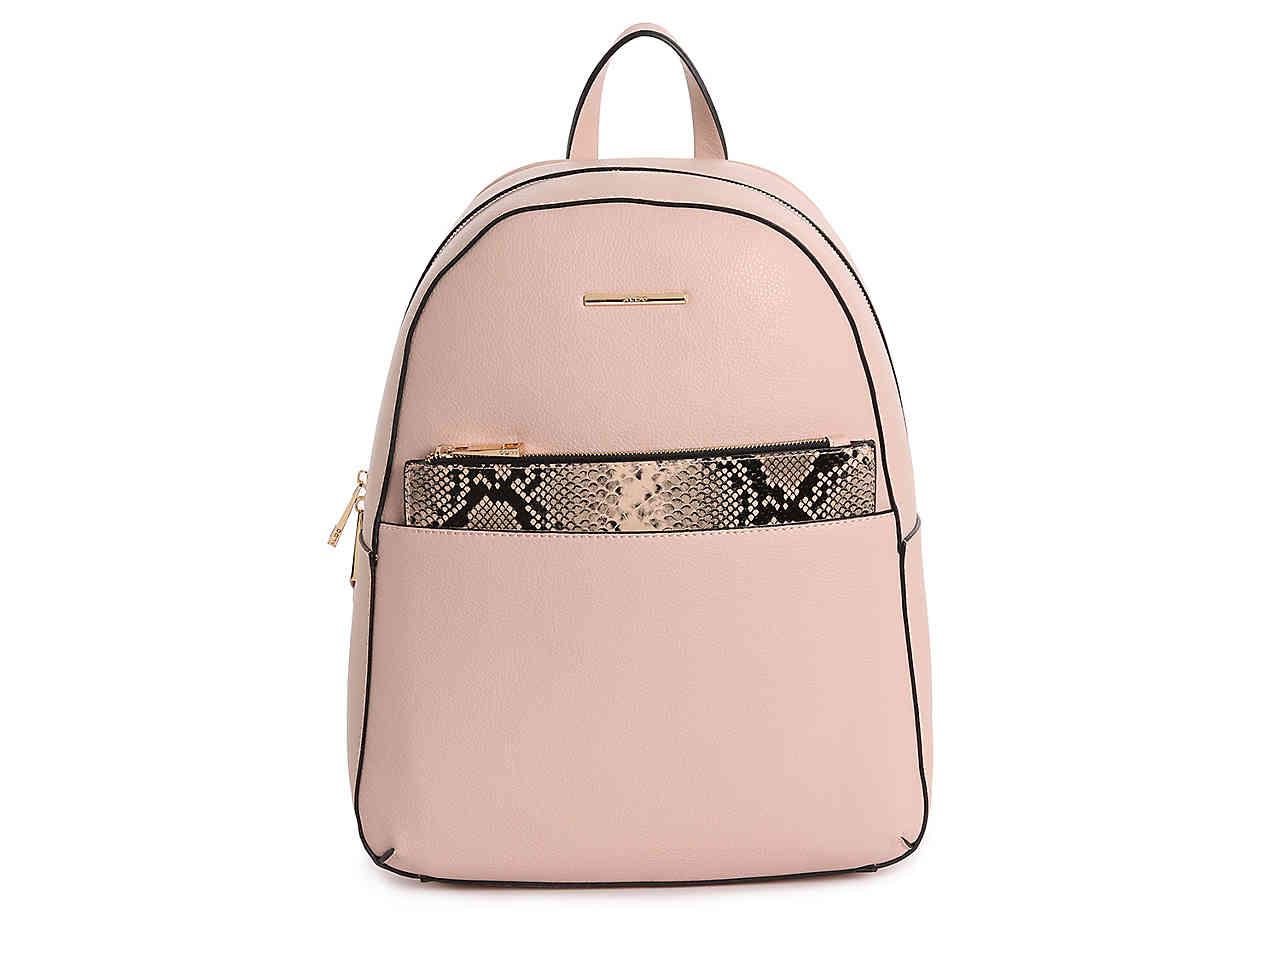 ALDO Hilisa Backpack in Pink | Lyst